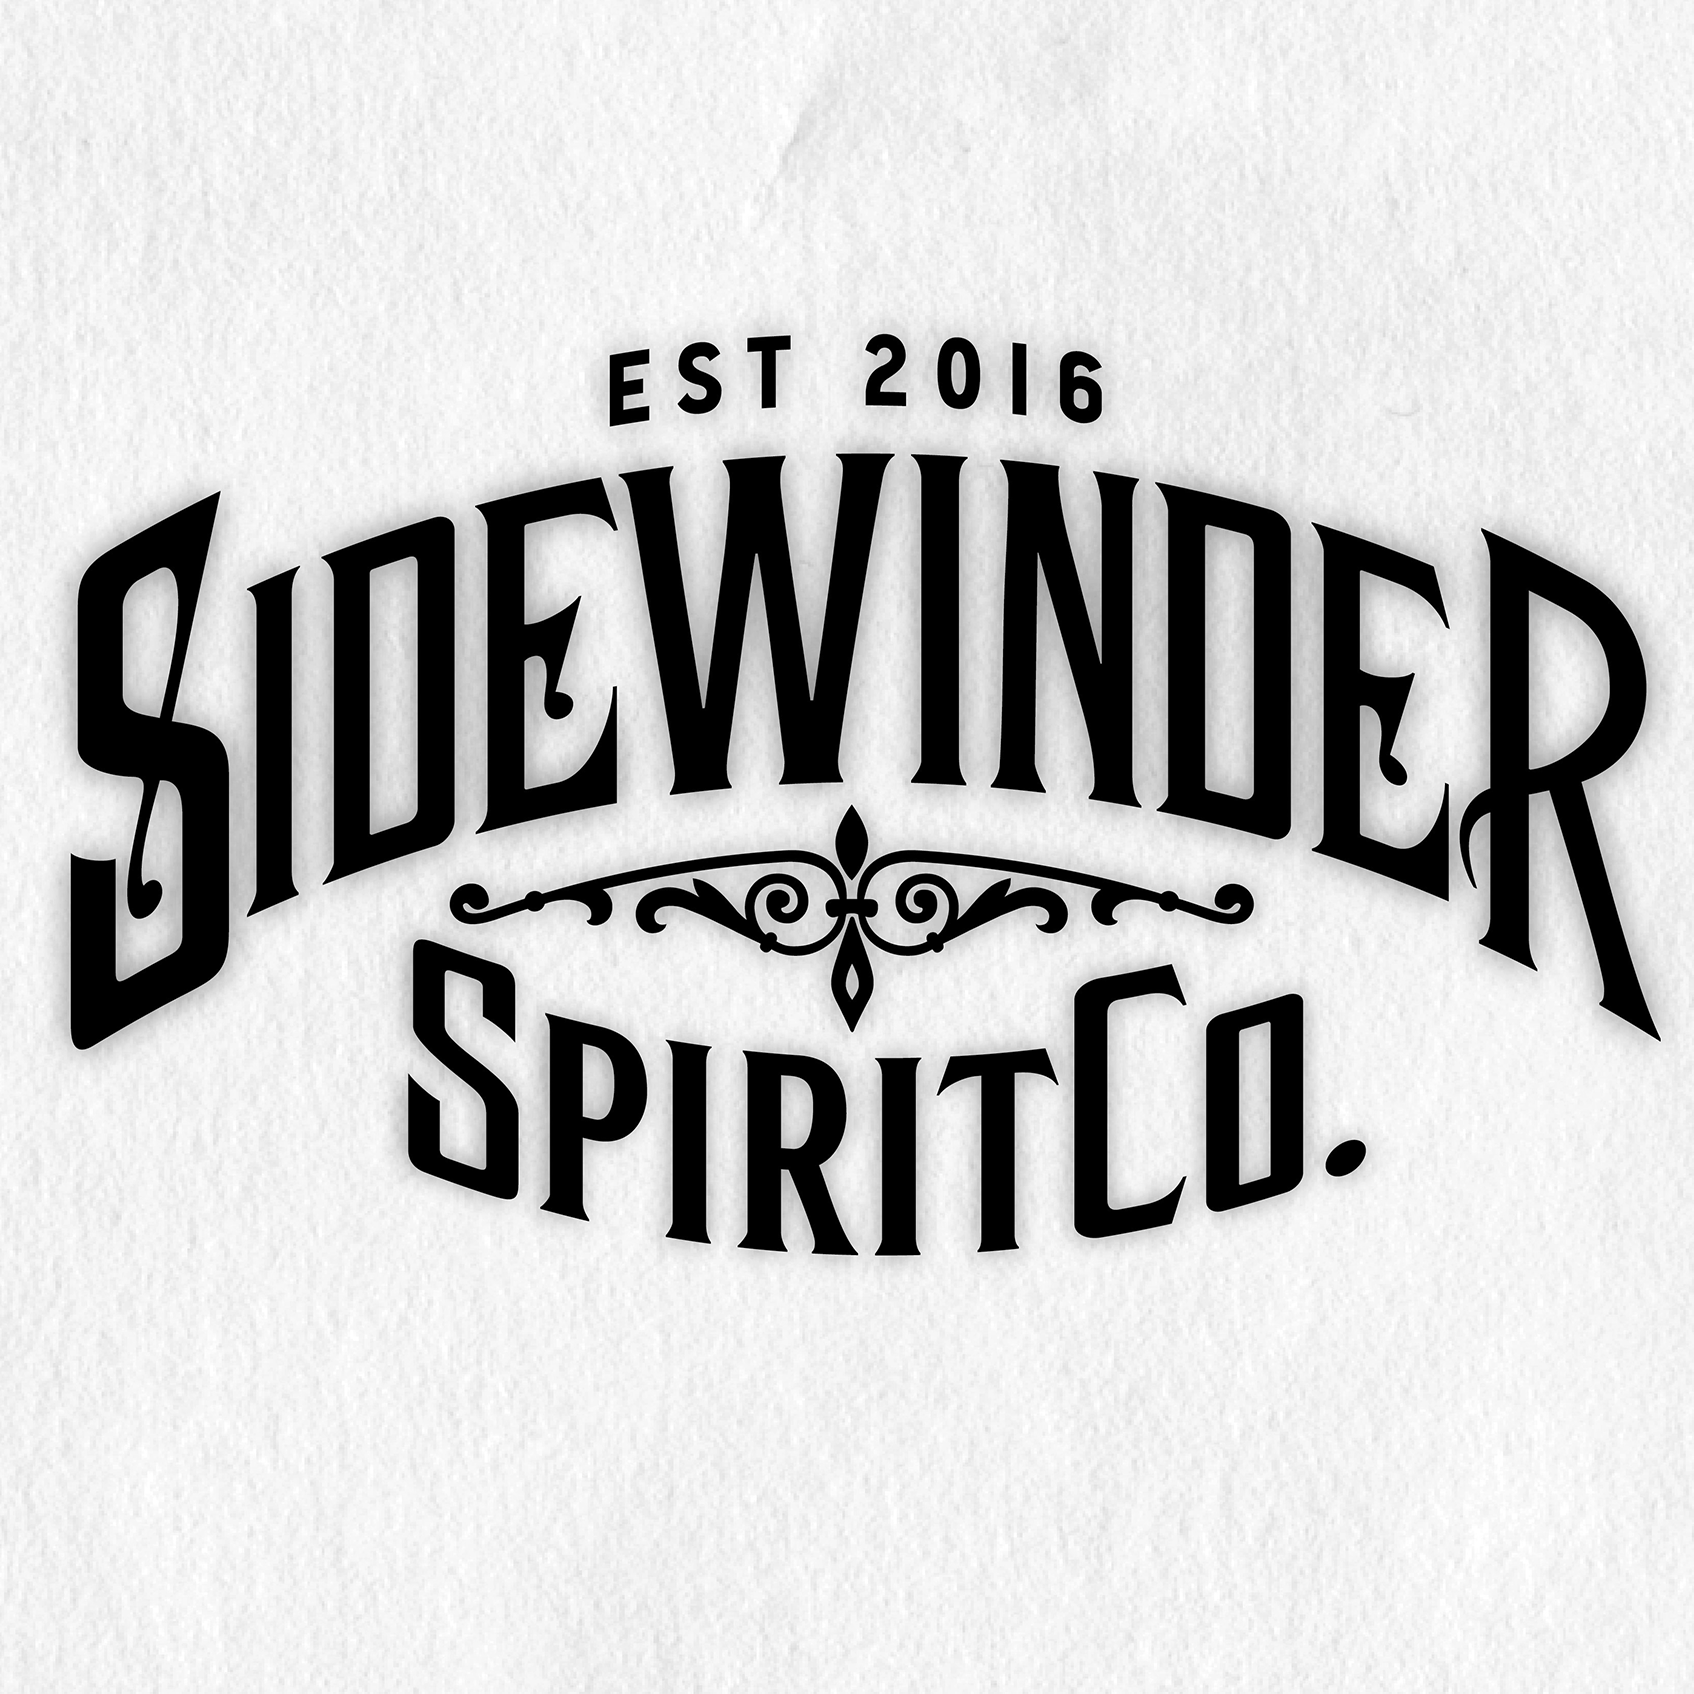 Sidewinder Spirits Company